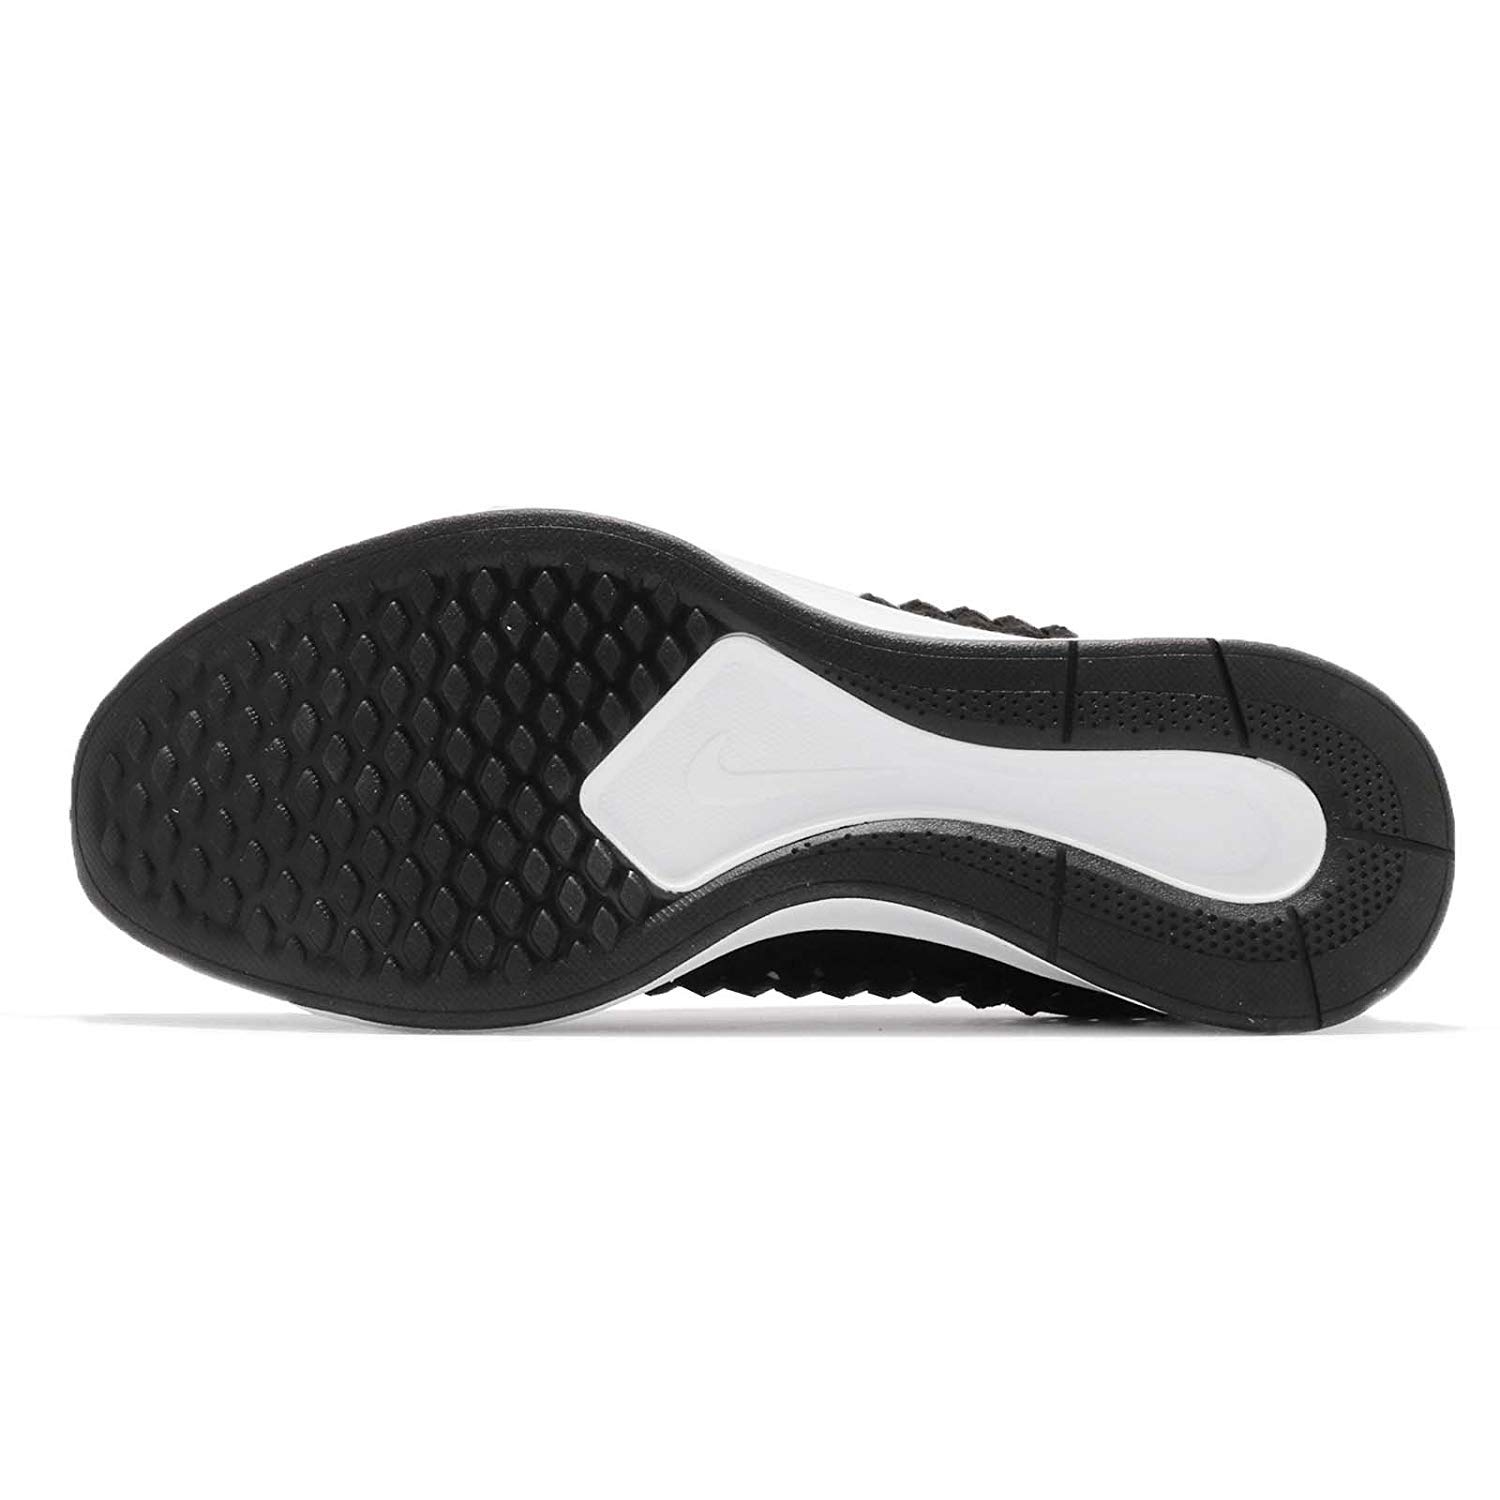 Nike Men's Dualtone Racer Woven Running Shoes (9.5, Black/Dark Grey-white) - image 4 of 6